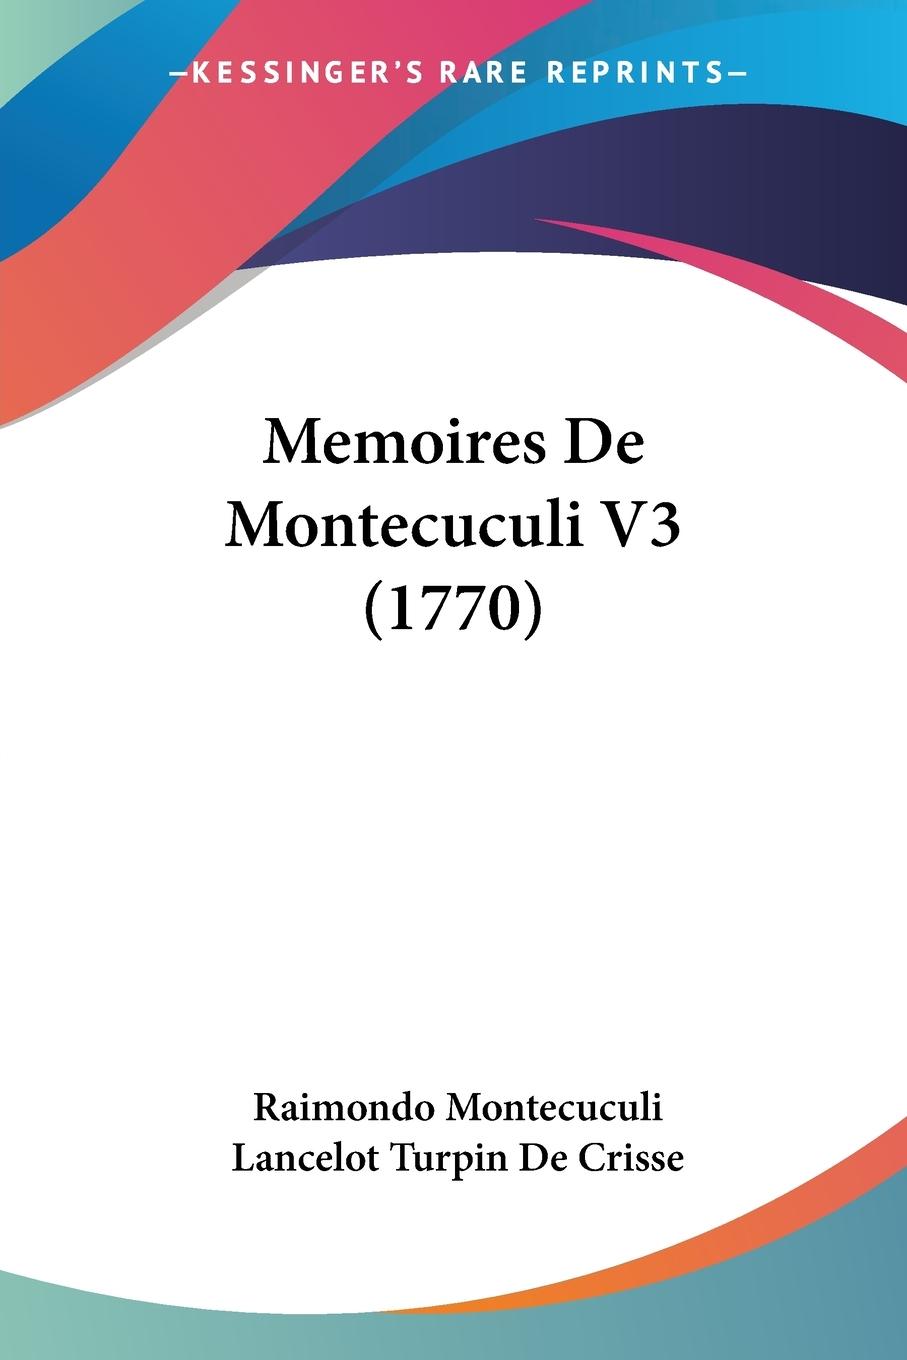 Memoires De Montecuculi V3 (1770) - Montecuculi, Raimondo Crisse, Lancelot Turpin De